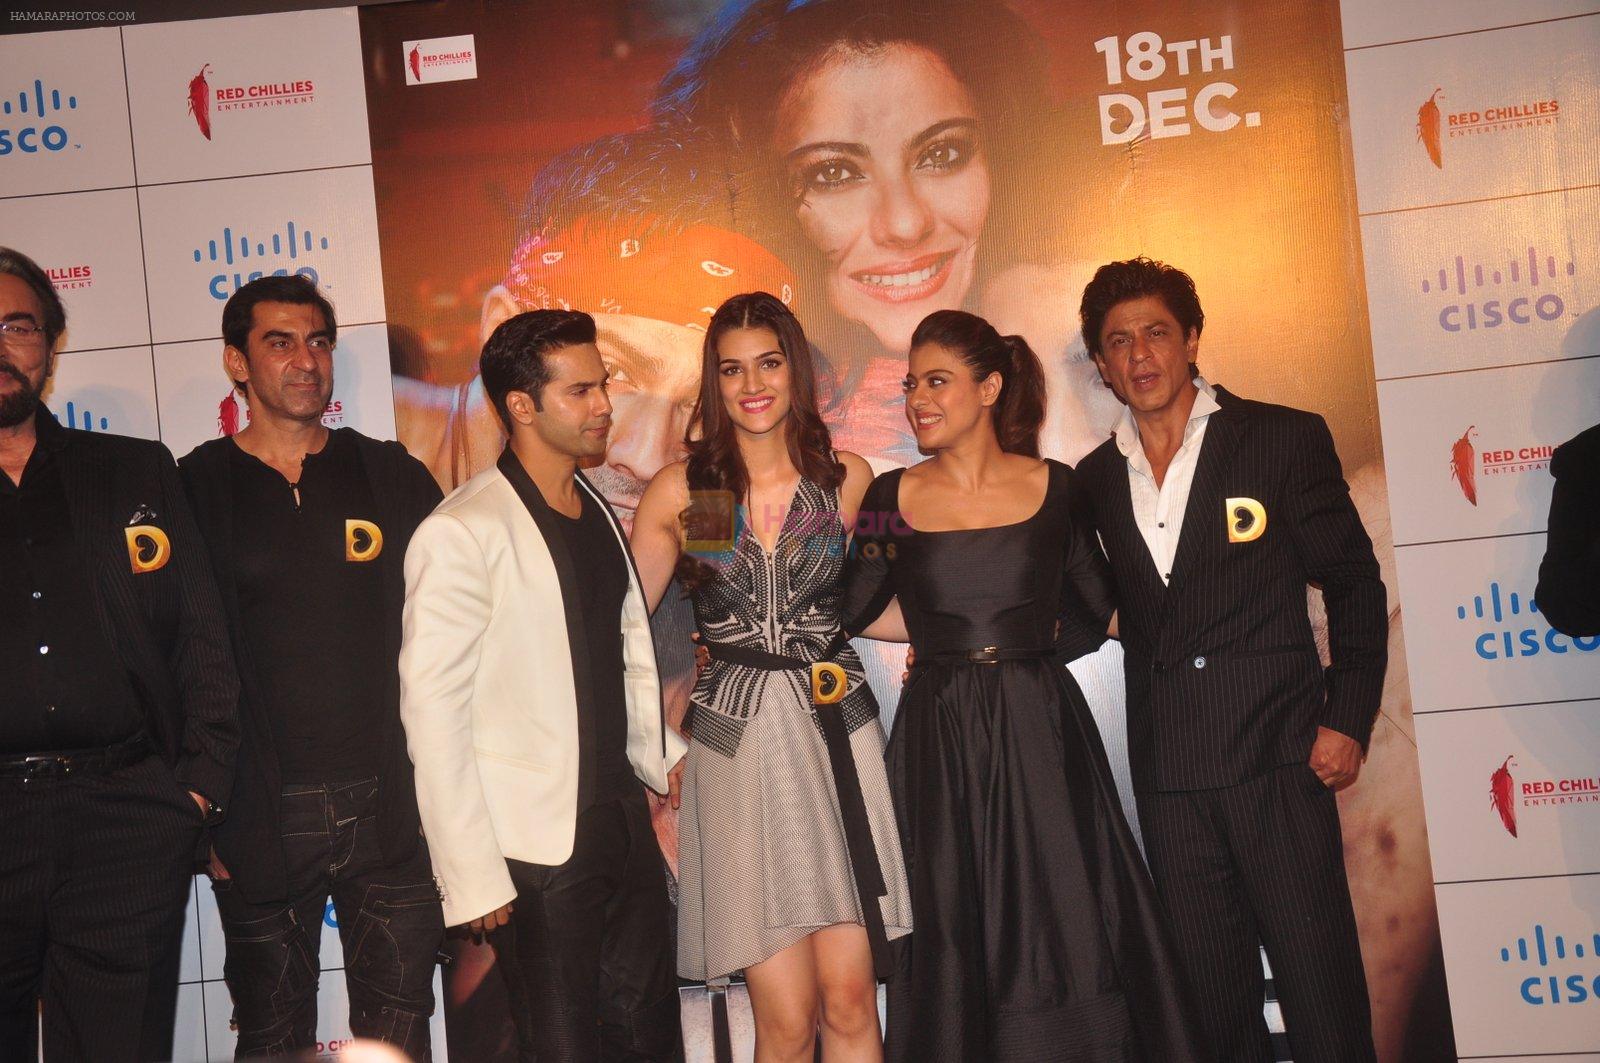 Rohit Shetty, Shahrukh Khan, Kajol, Varun Dhawan, Kriti Sanon at Dilwale Trailor launch on 9th Nov 2015